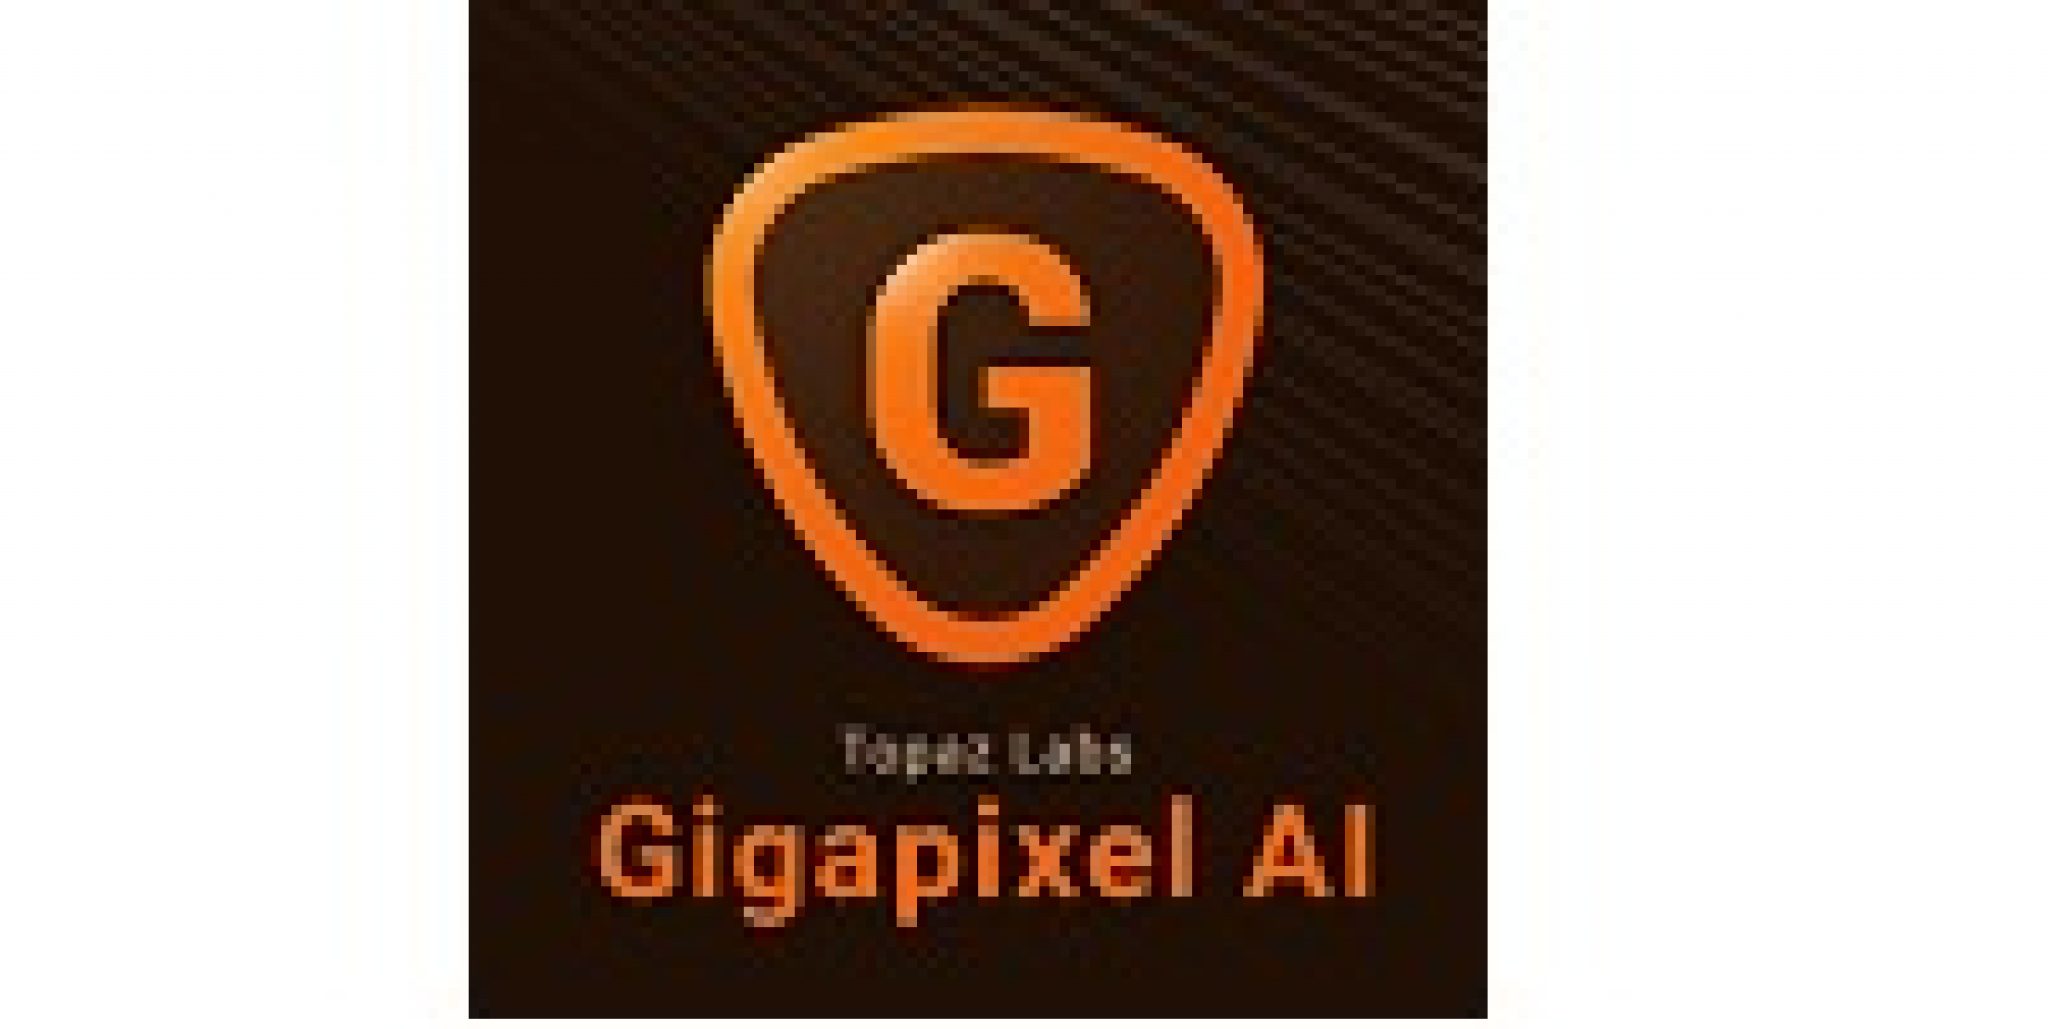 topaz gigapixel ai free download